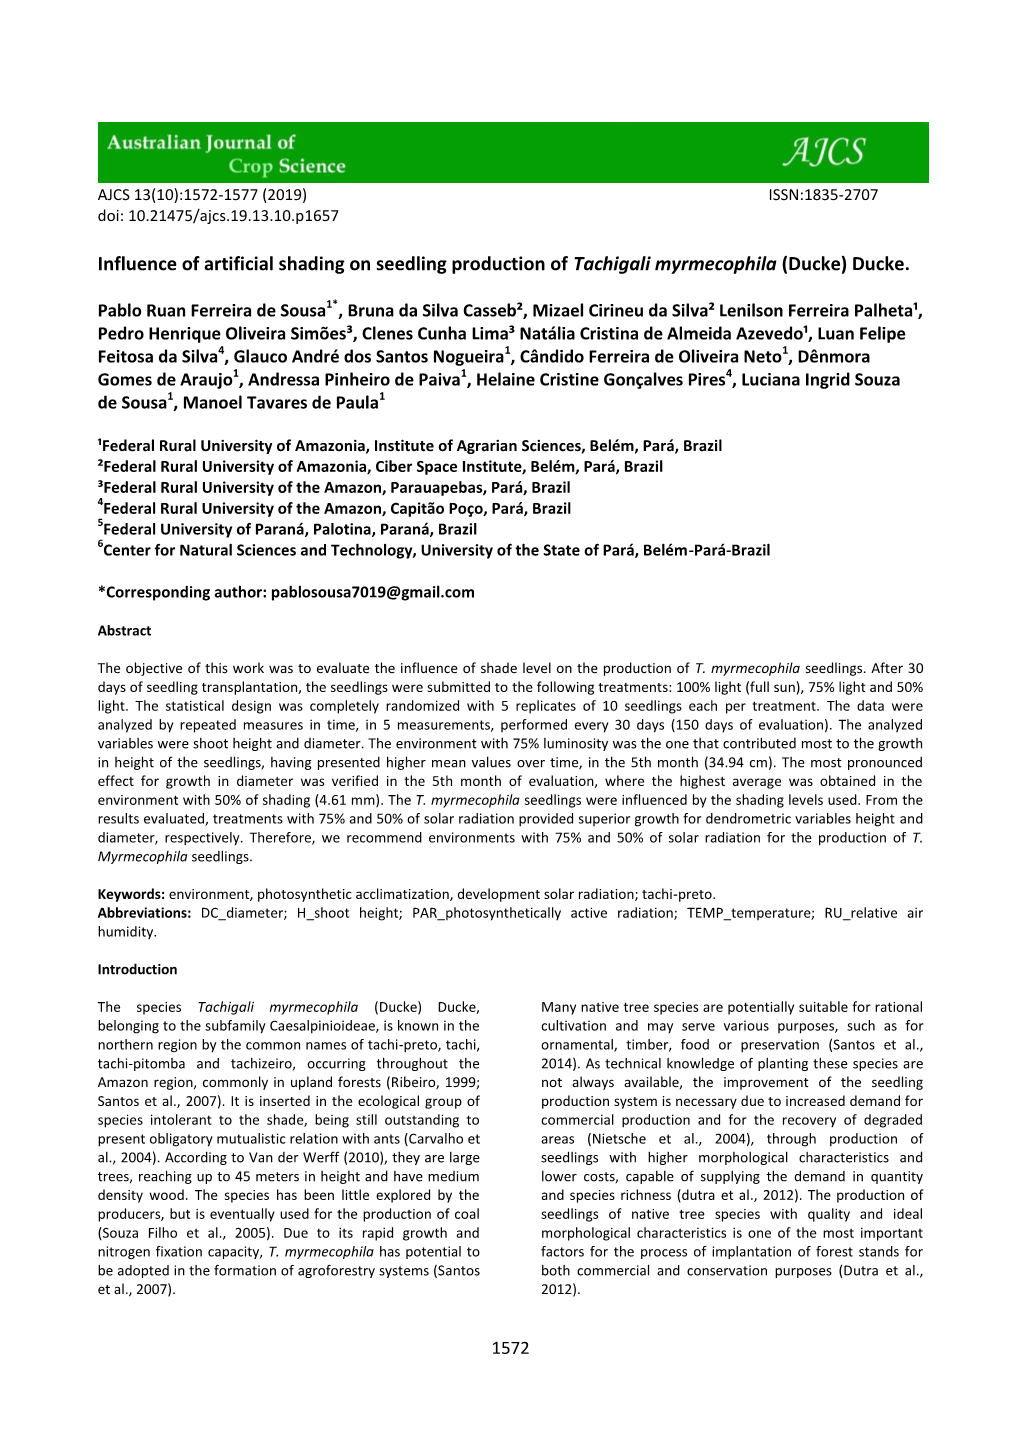 Influence of Artificial Shading on Seedling Production of Tachigali Myrmecophila (Ducke) Ducke